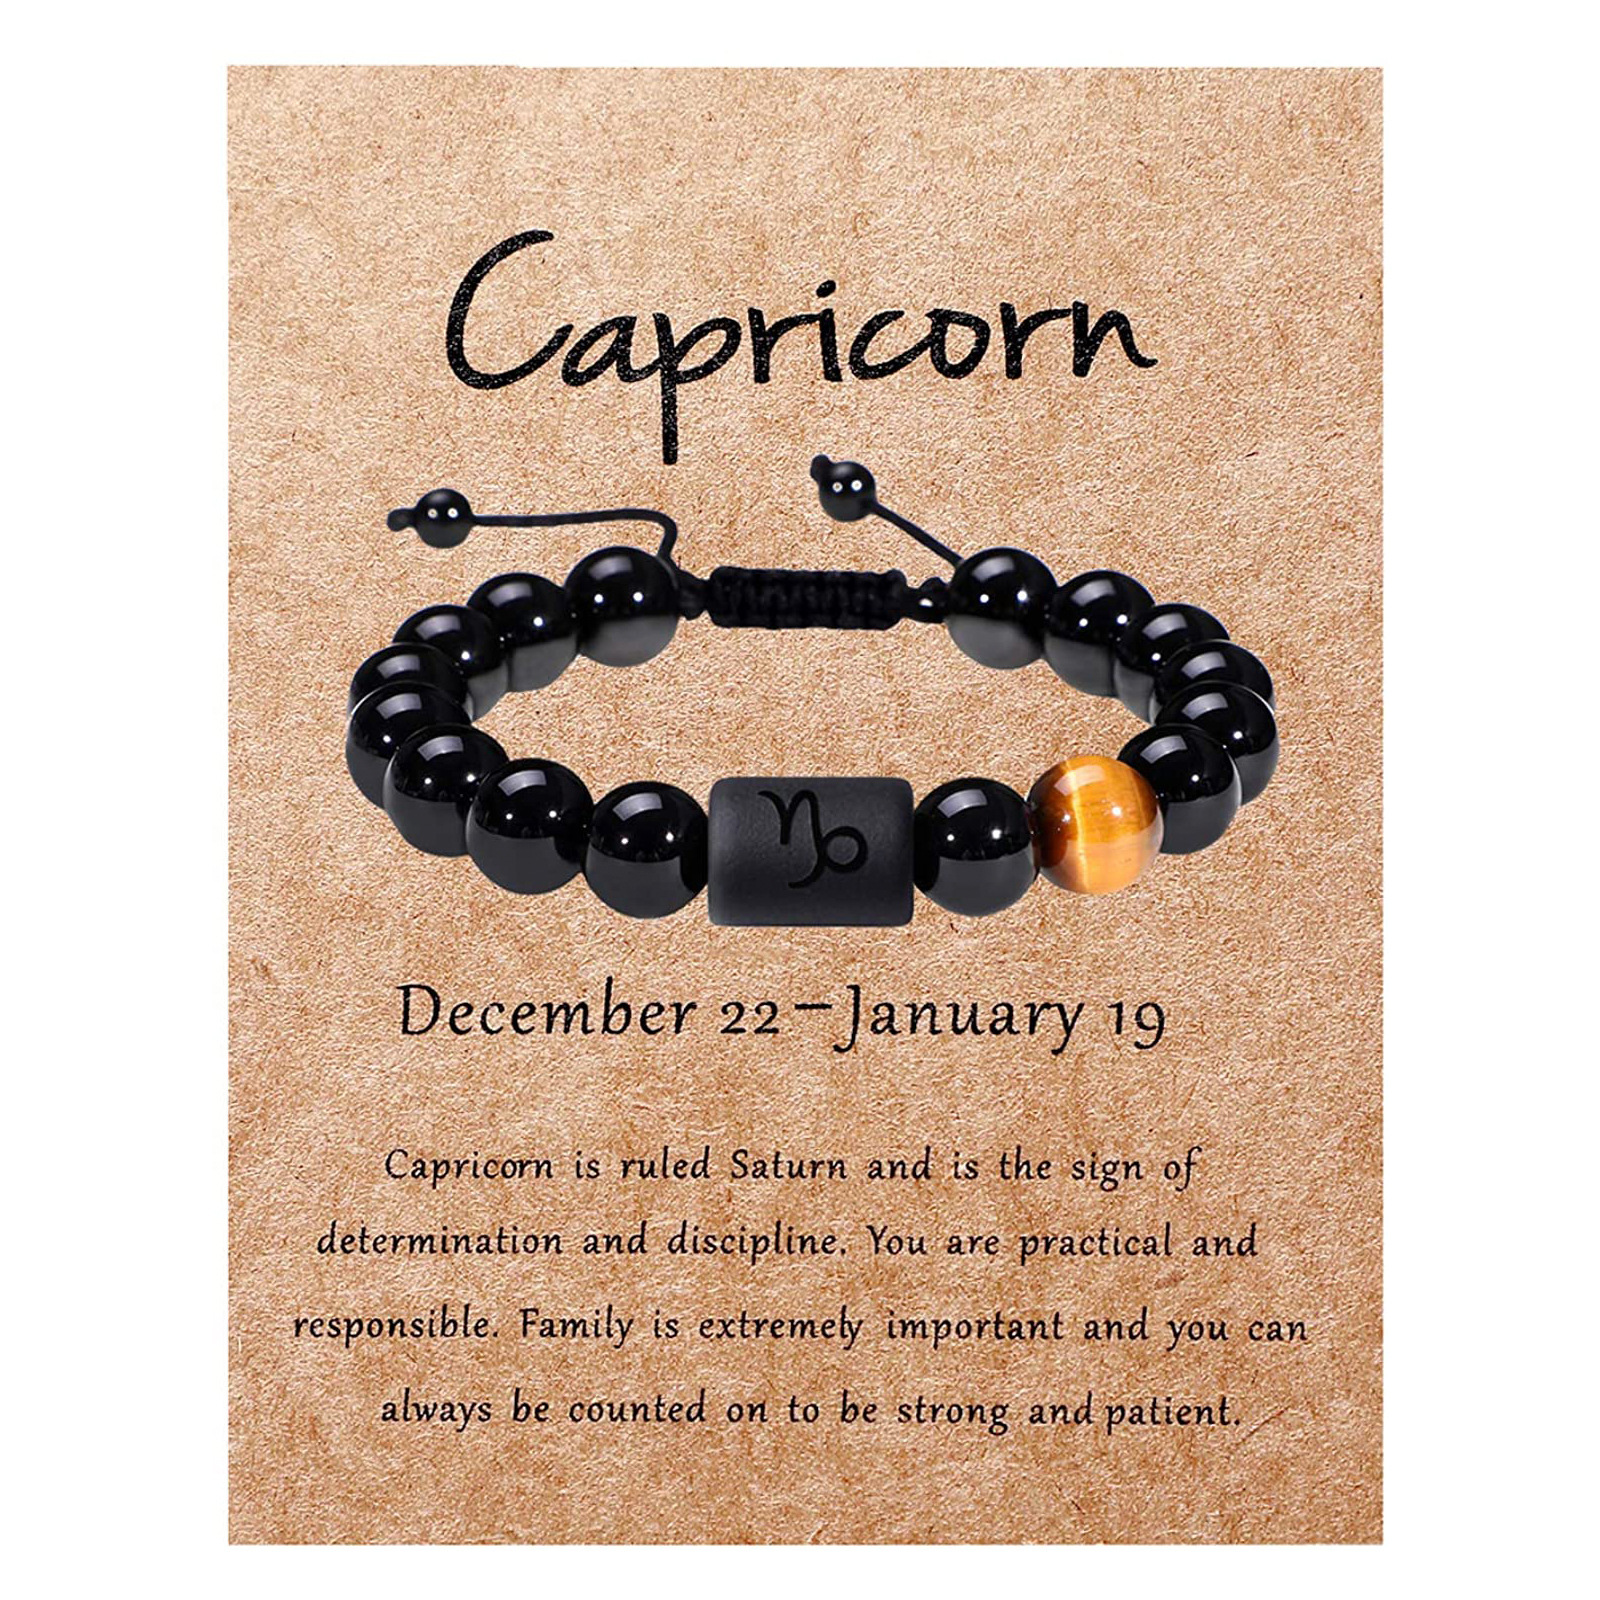 Capricorn 8MM beads